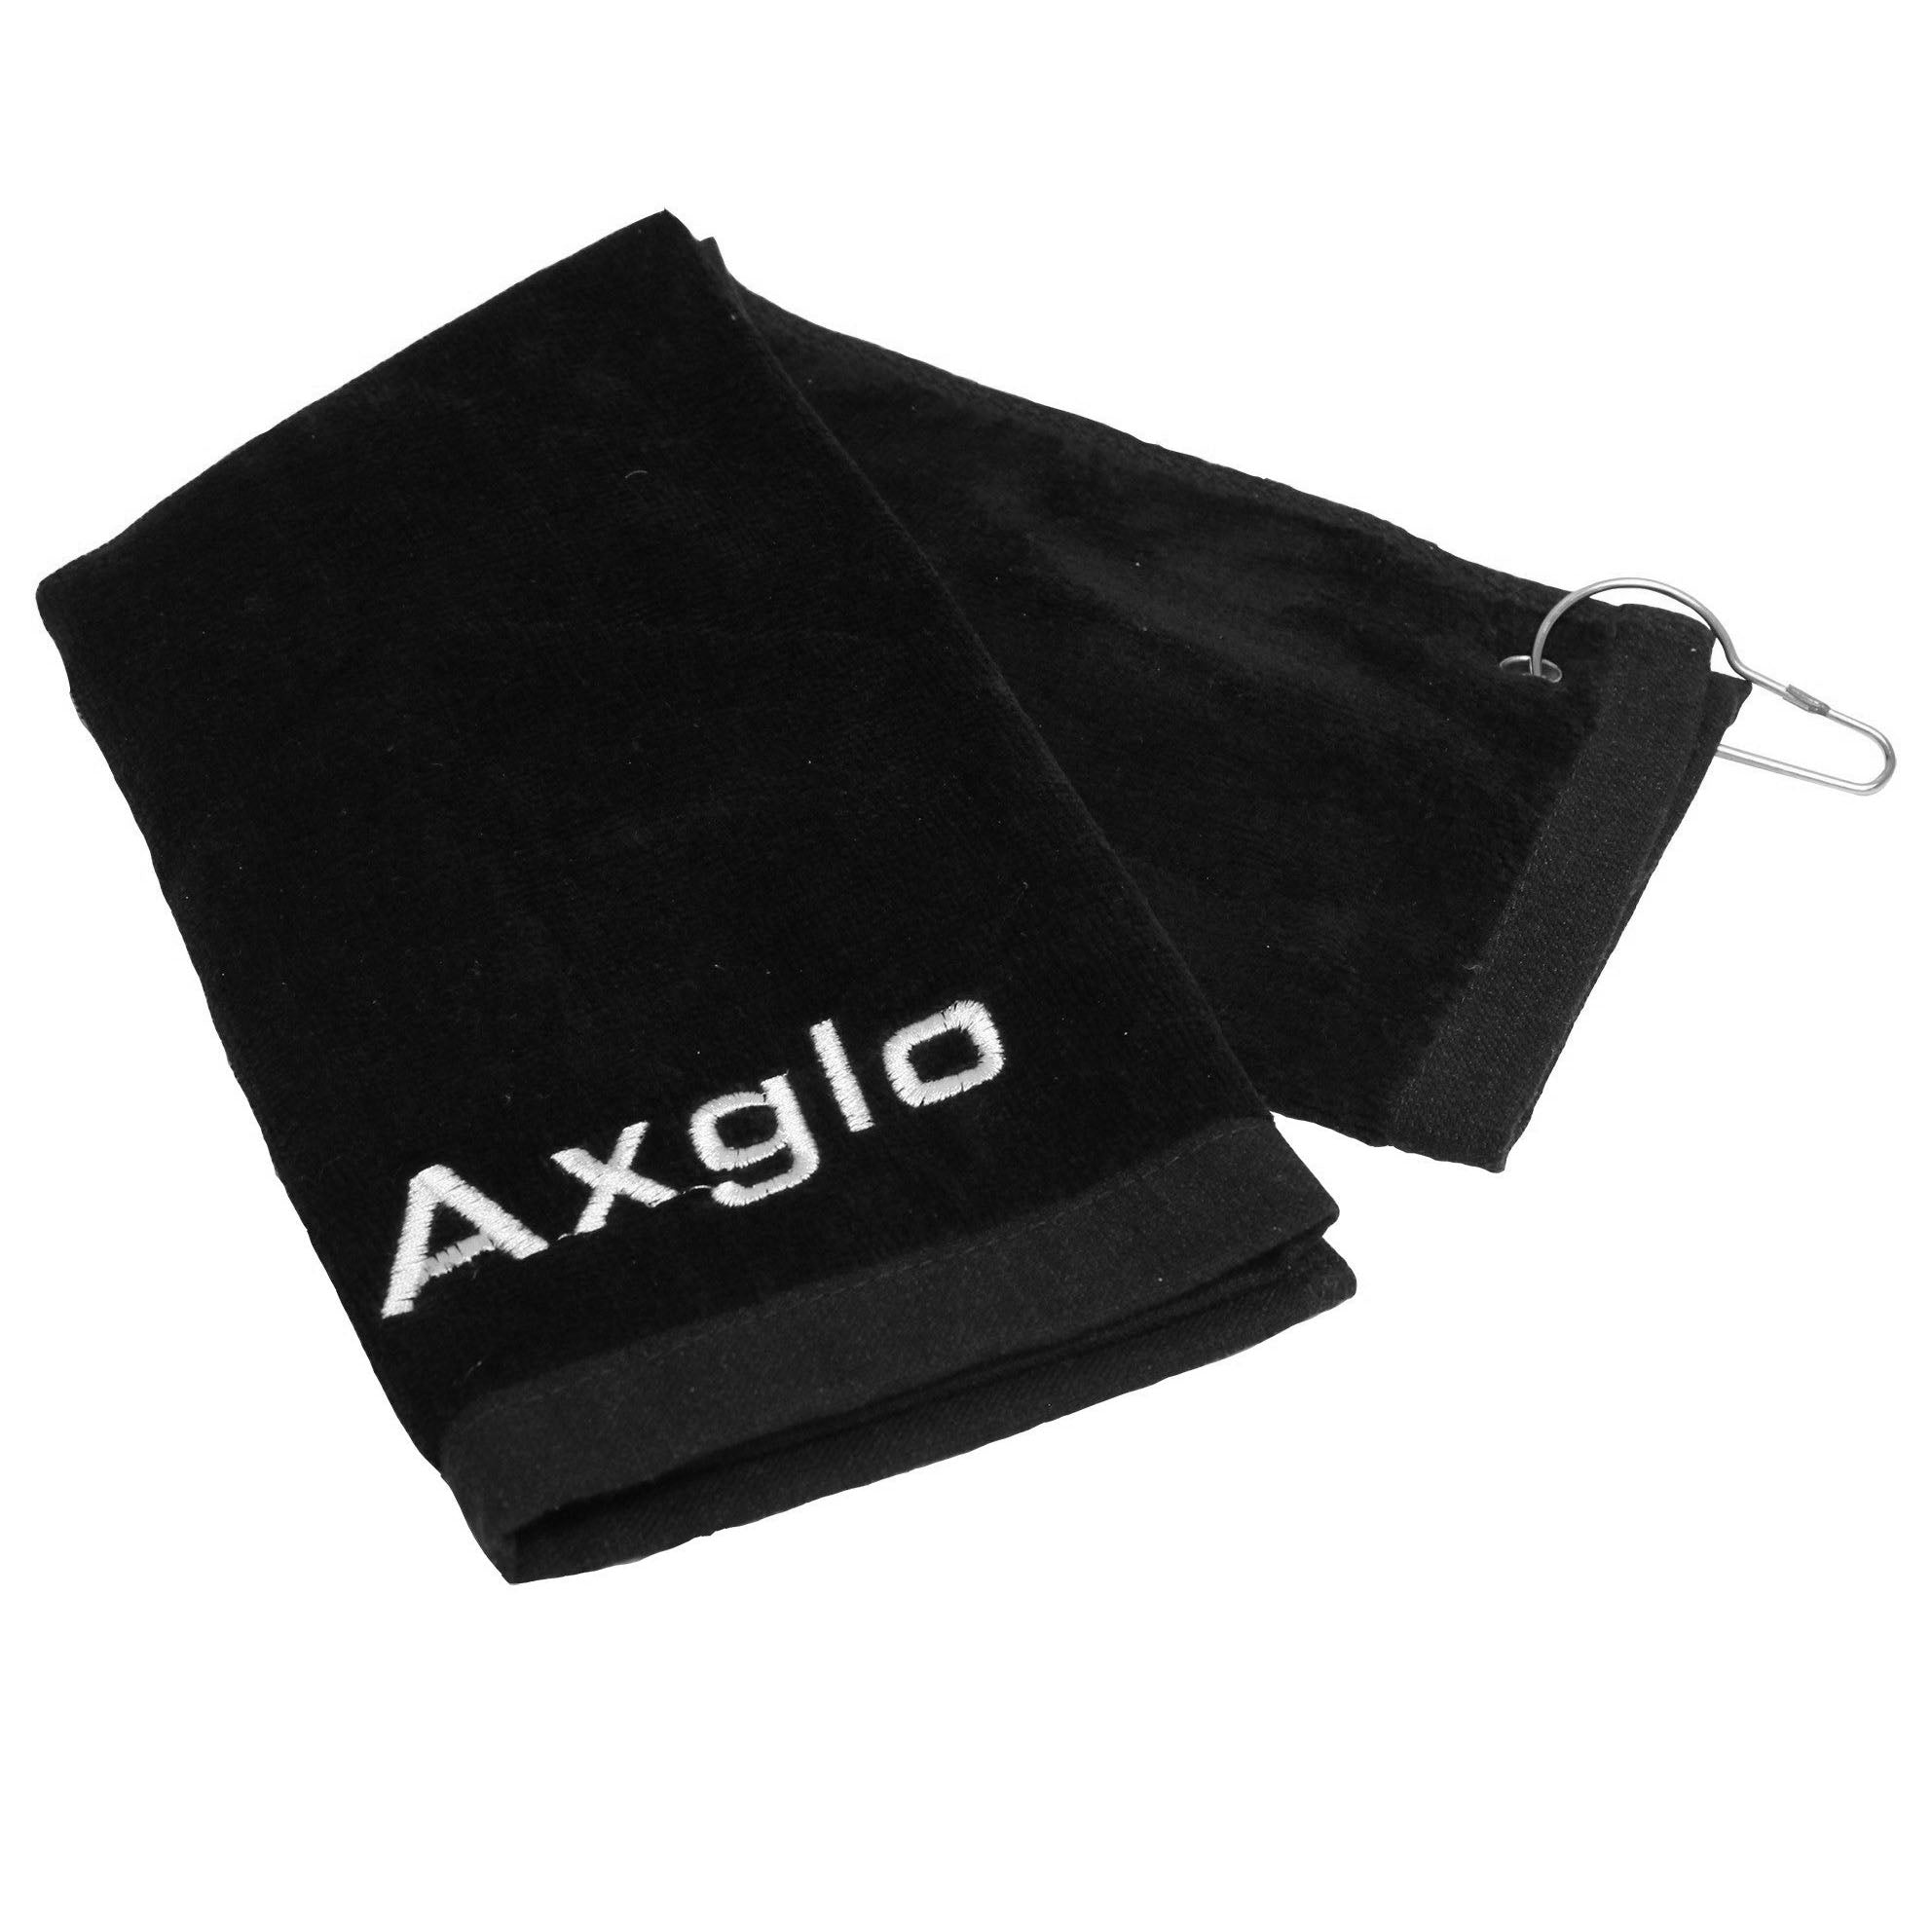 Axglo Golf Towel - black